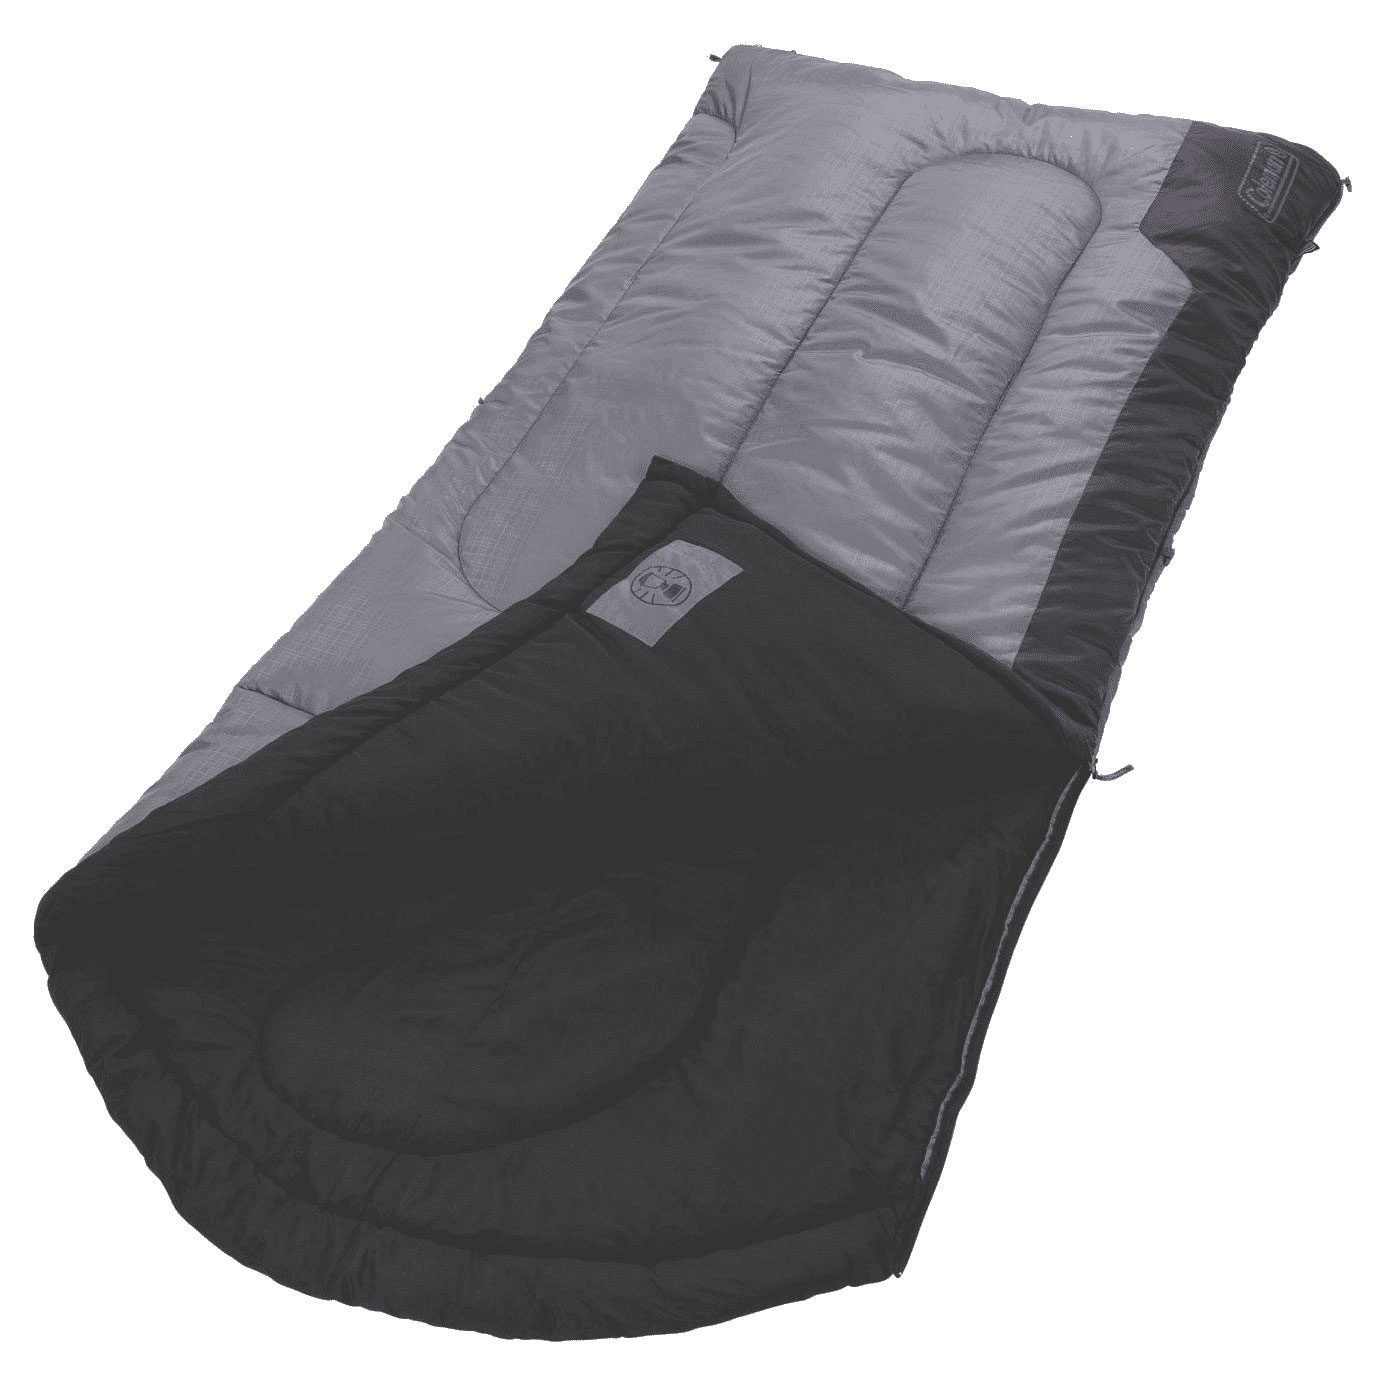  Coleman *Sleeping Bag STRAT 50F Fleece Gray C003